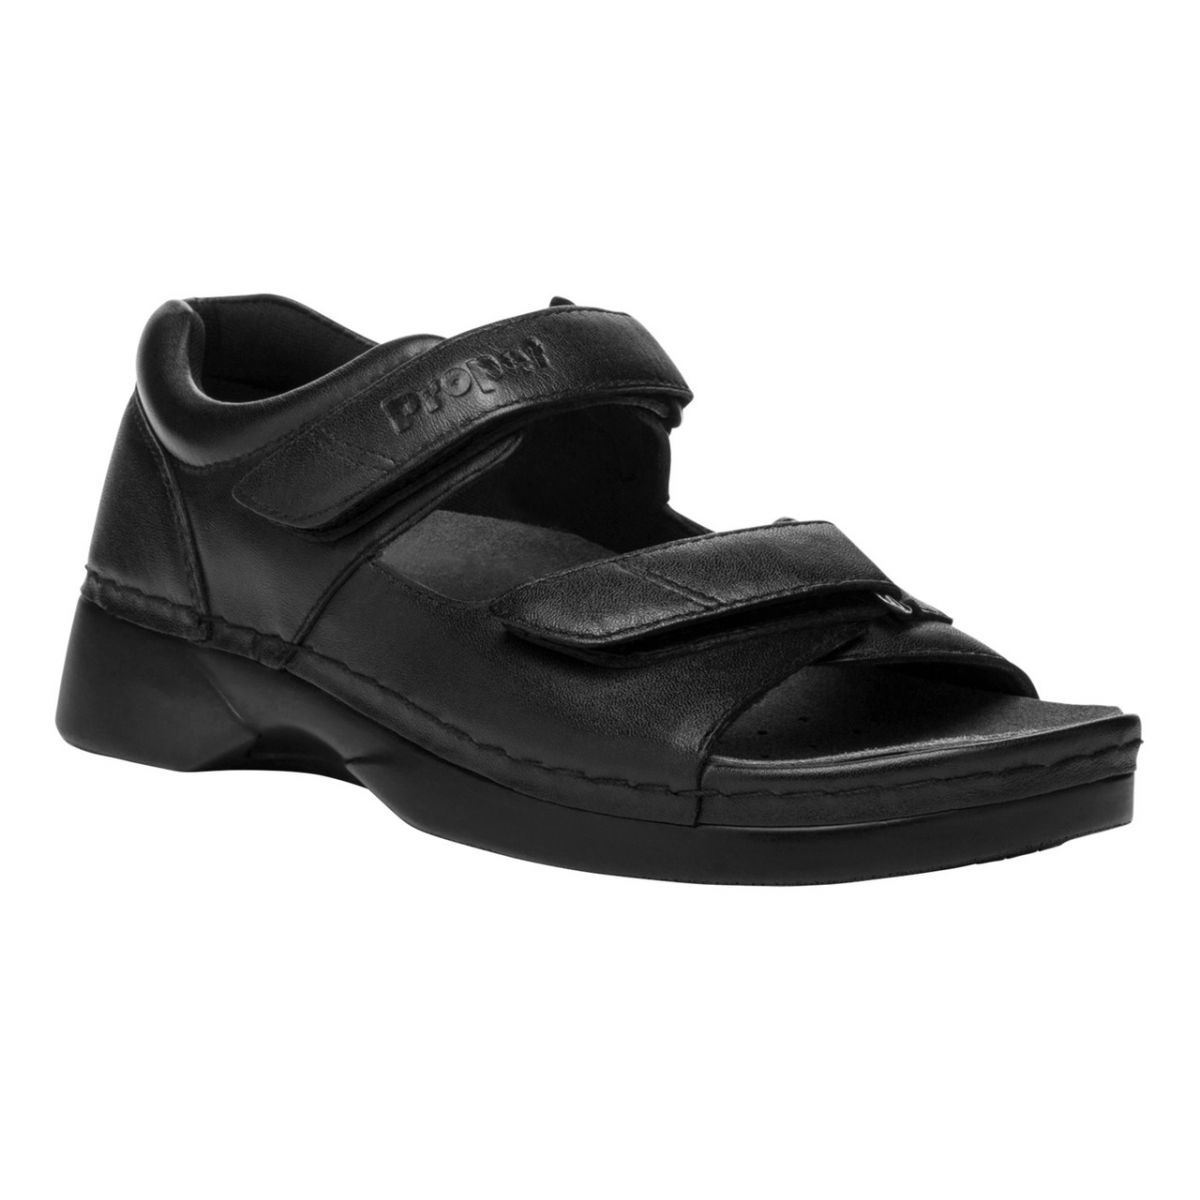 Propet Women's Pedic Walker Sandal Black - W0089B BLACK - BLACK, 9.5 X-Wide